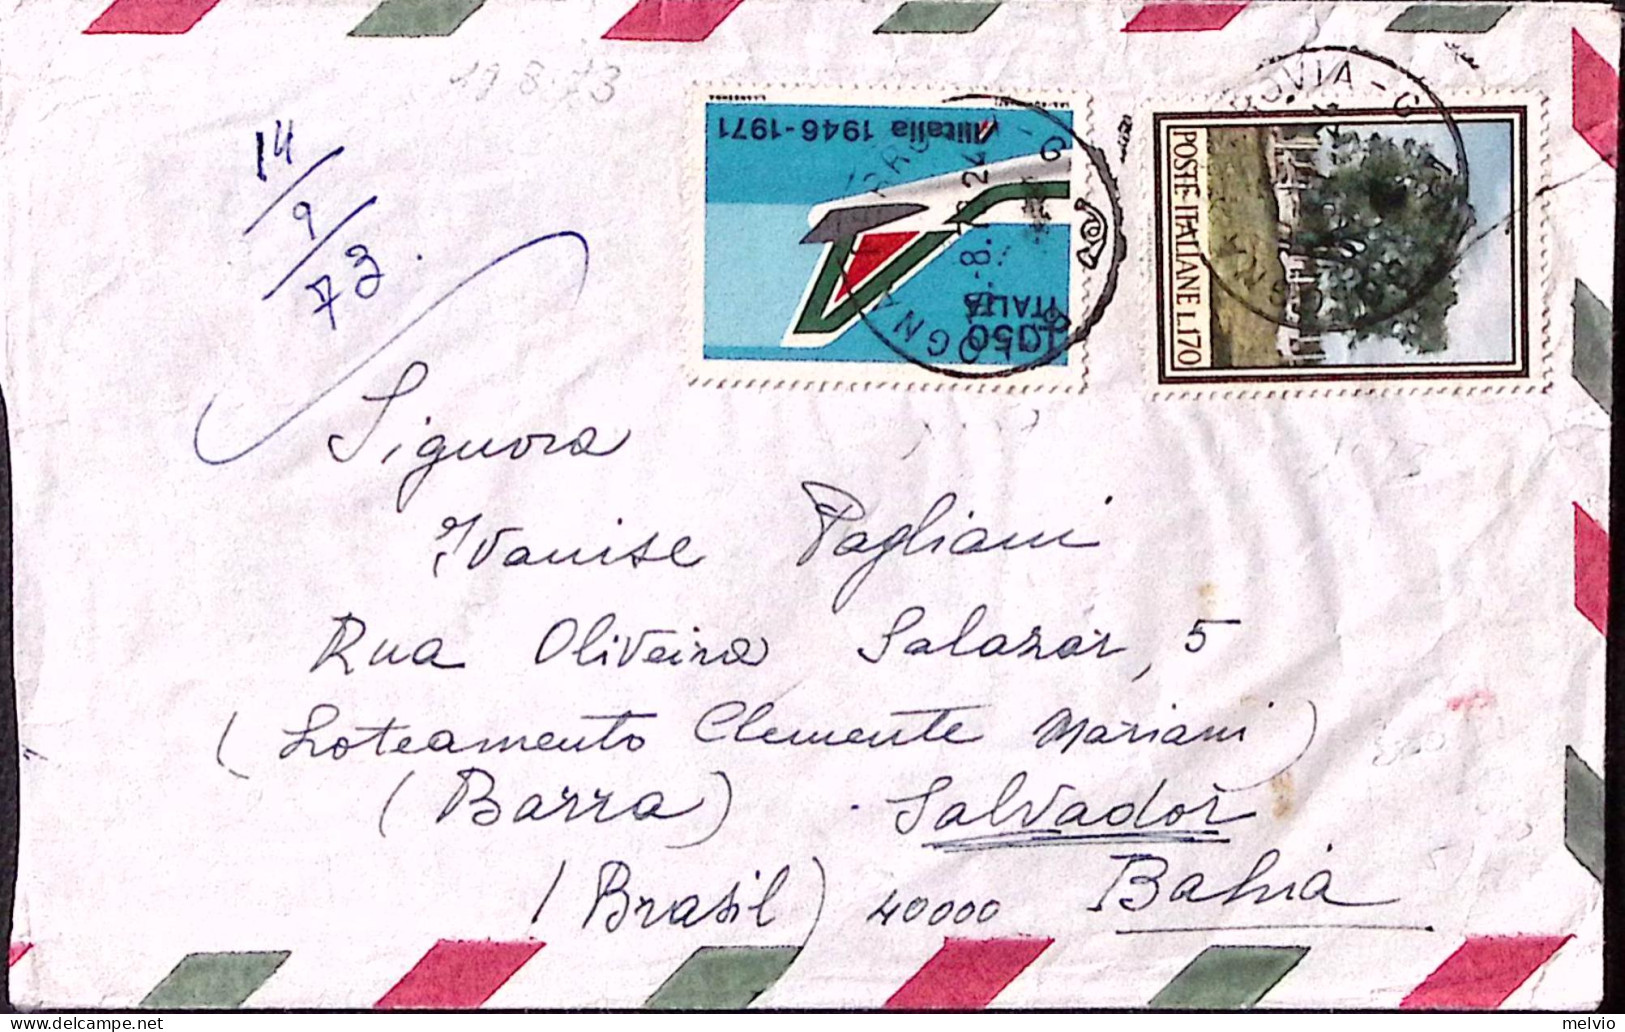 1973-ALITALIA Lire 150 + PARCHI Lire 170 Su Busta Via Aerea Per Il Brasile - 1971-80: Poststempel